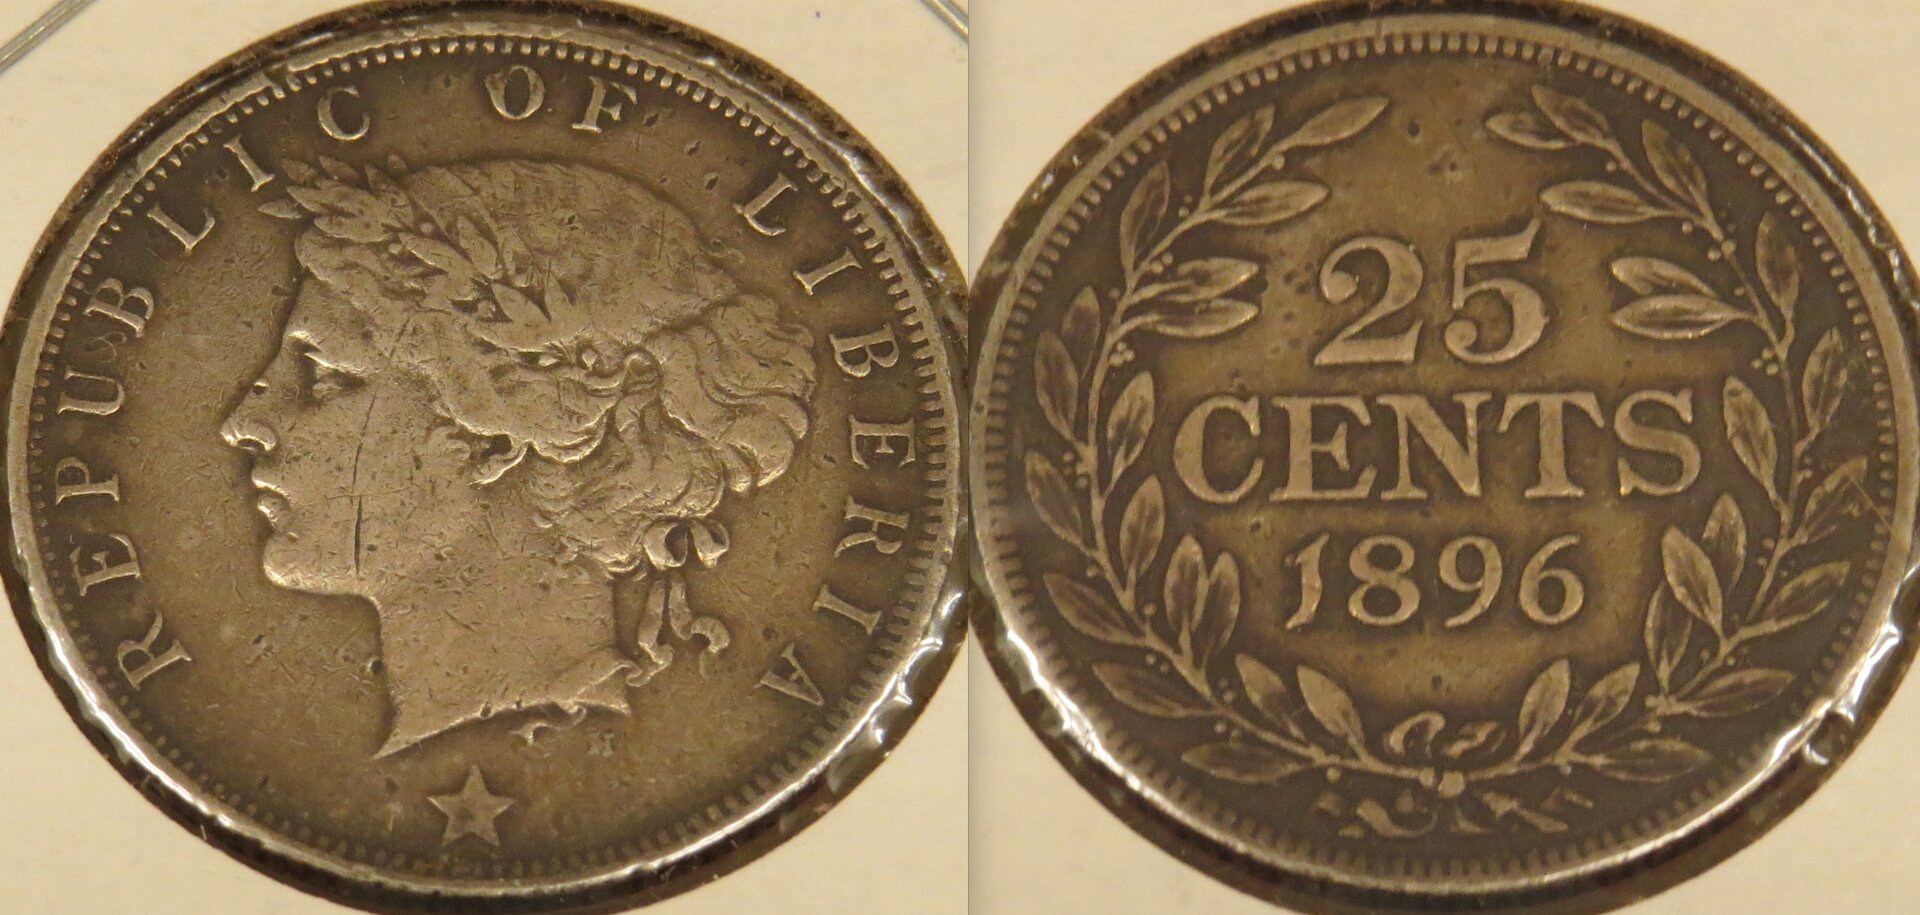 Liberia 25 cents 1896 copy.jpeg